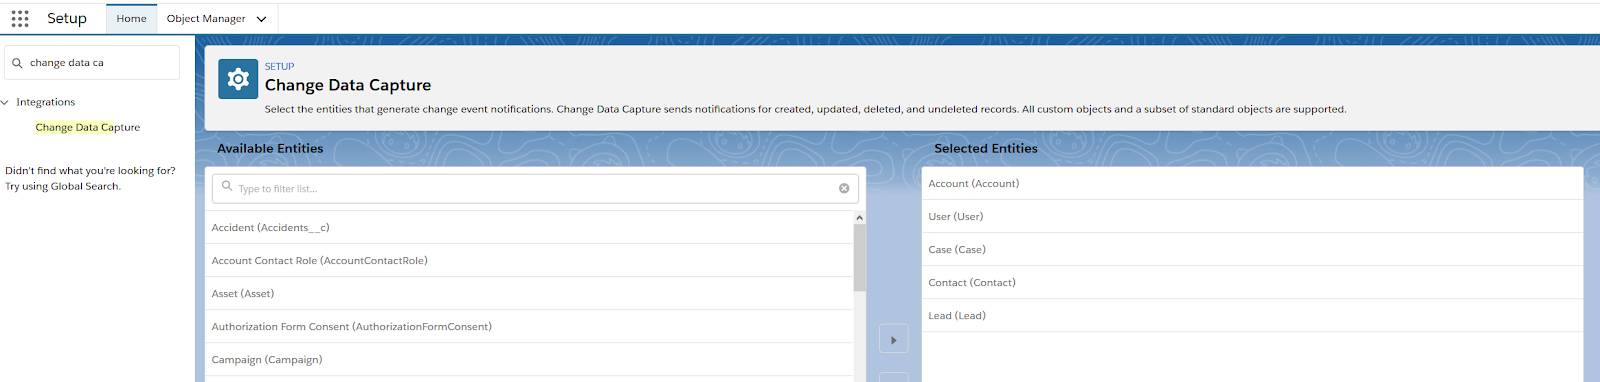 Change Data Capture(변경 데이터 캡처) 페이지에서 Selected Entities(선택한 엔티티) 열 아래에 있는 Account(계정), User(사용자), Case(사례), Contact(연락처), Lead(잠재 고객)